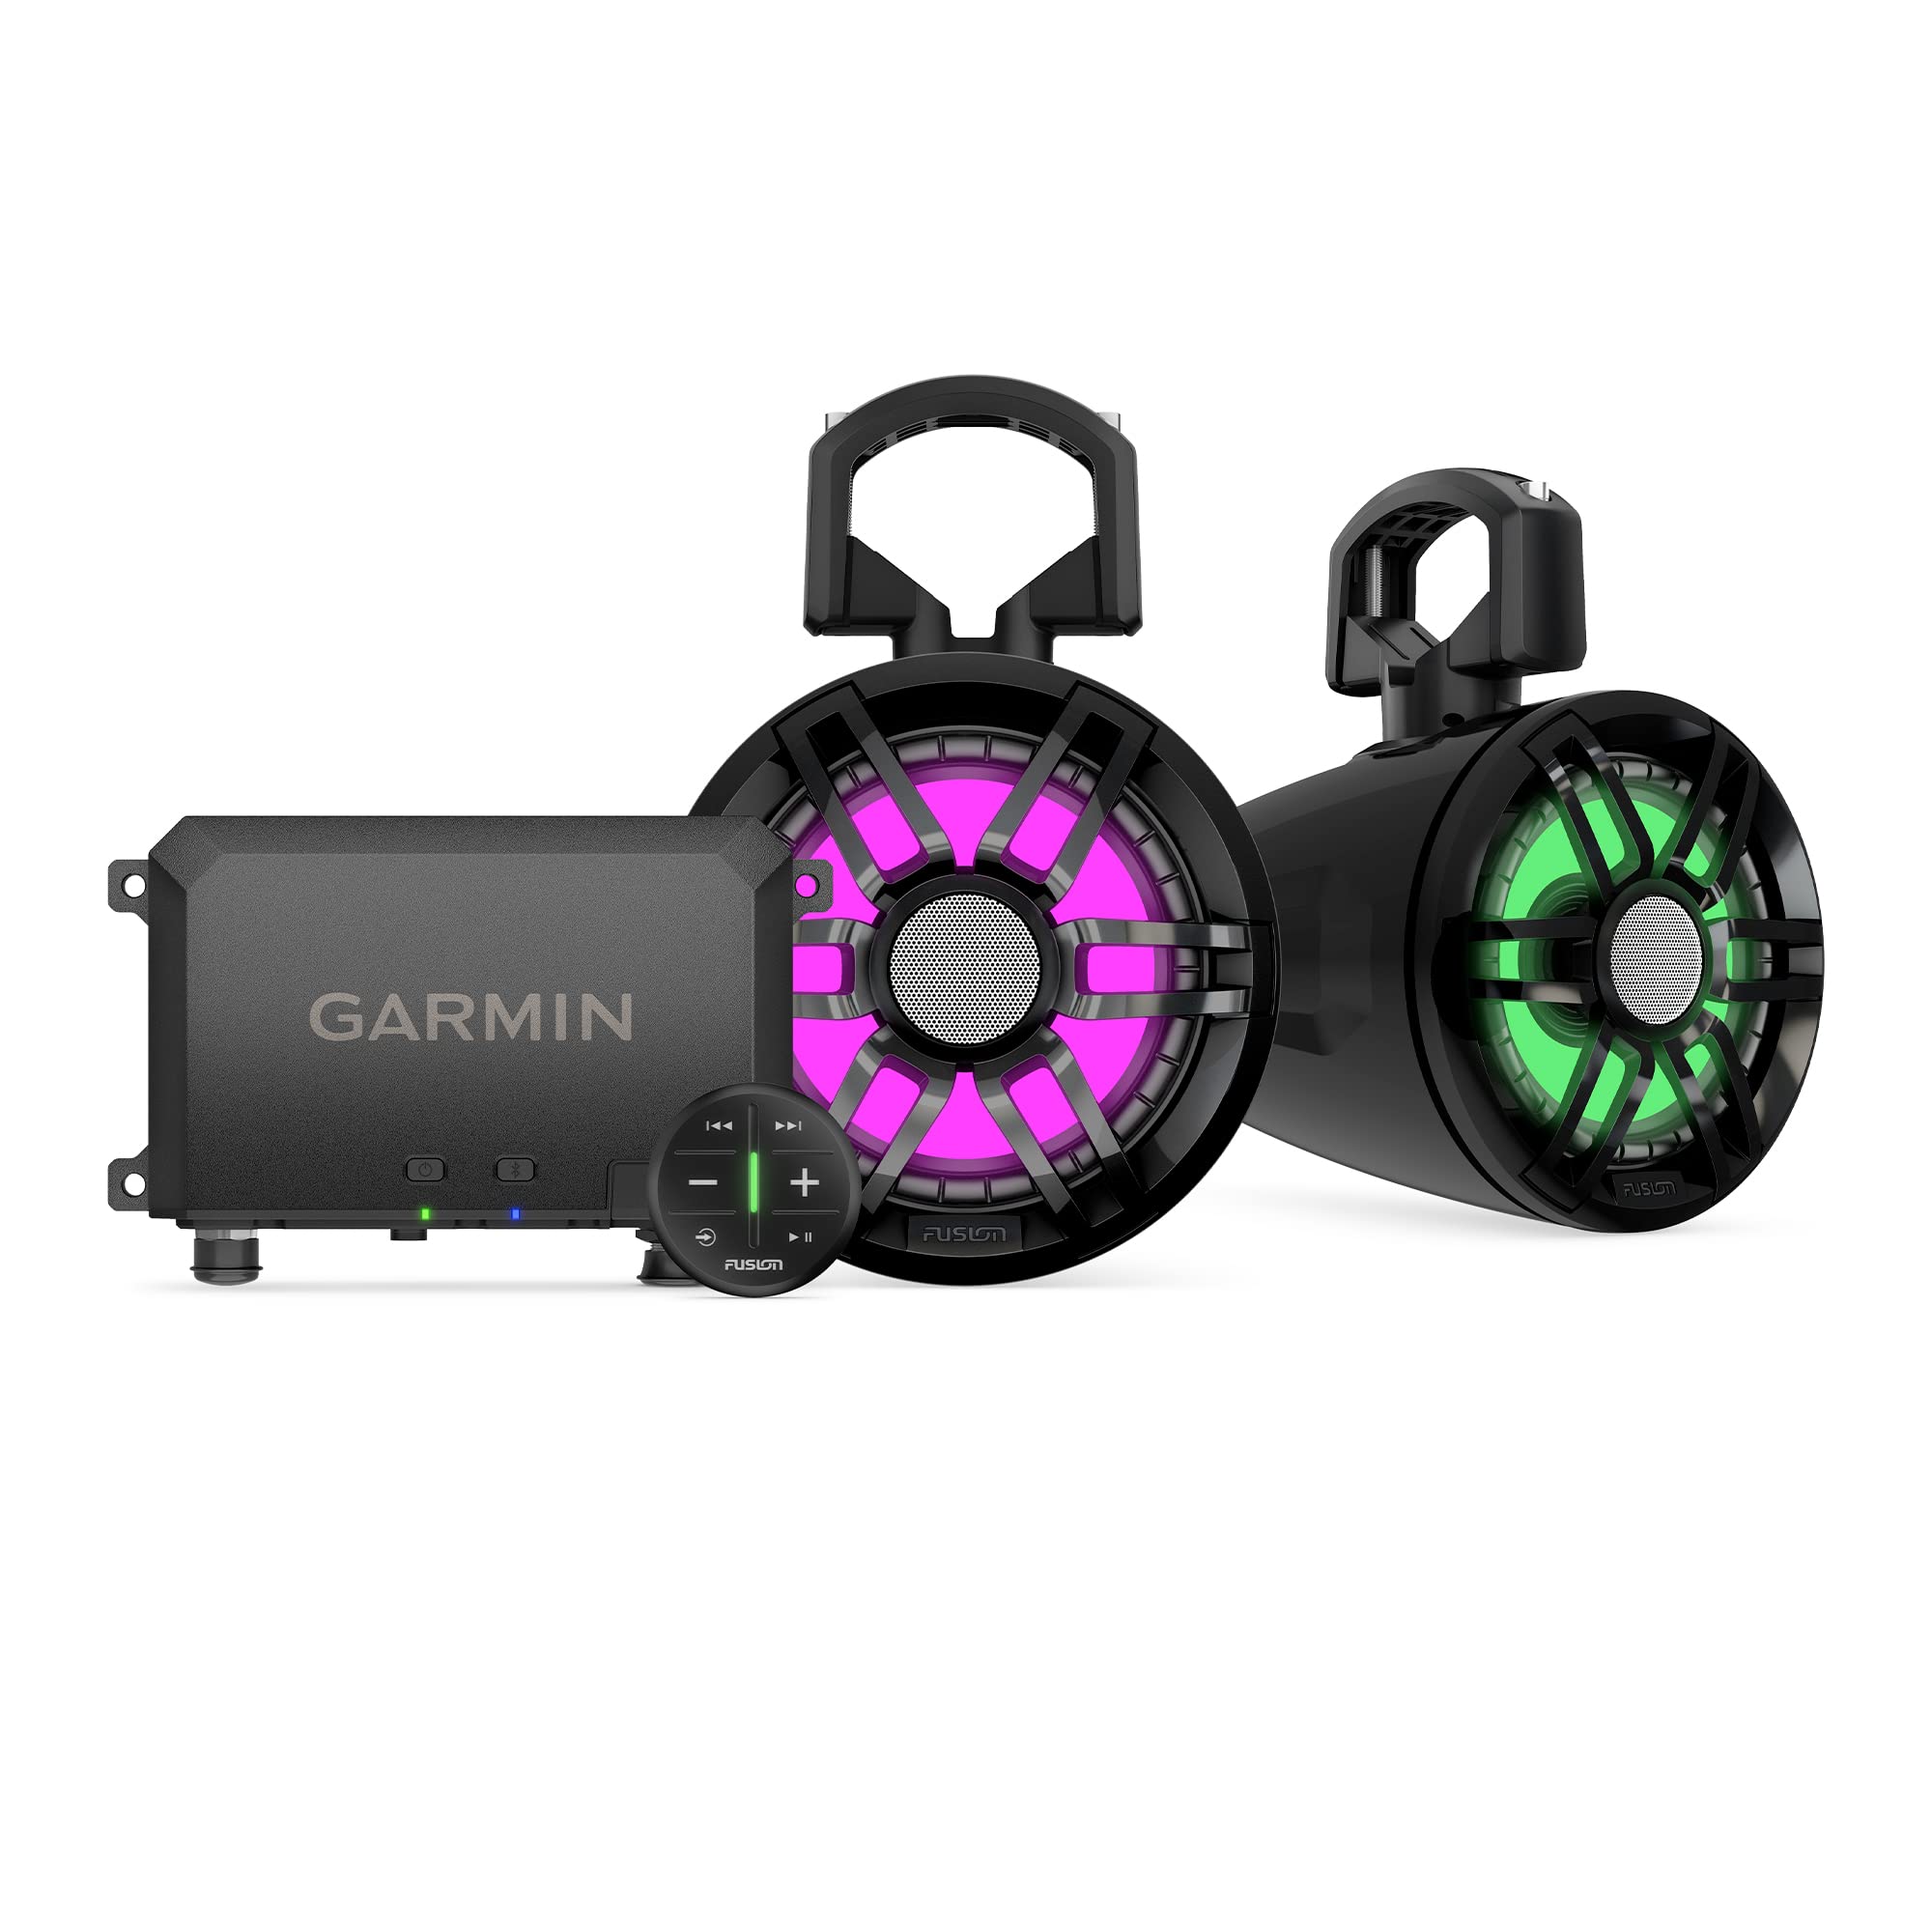 Garmin - Tread Audio System with LED Controller, Rugged Design, Premium Quality Audio, Wireless Control